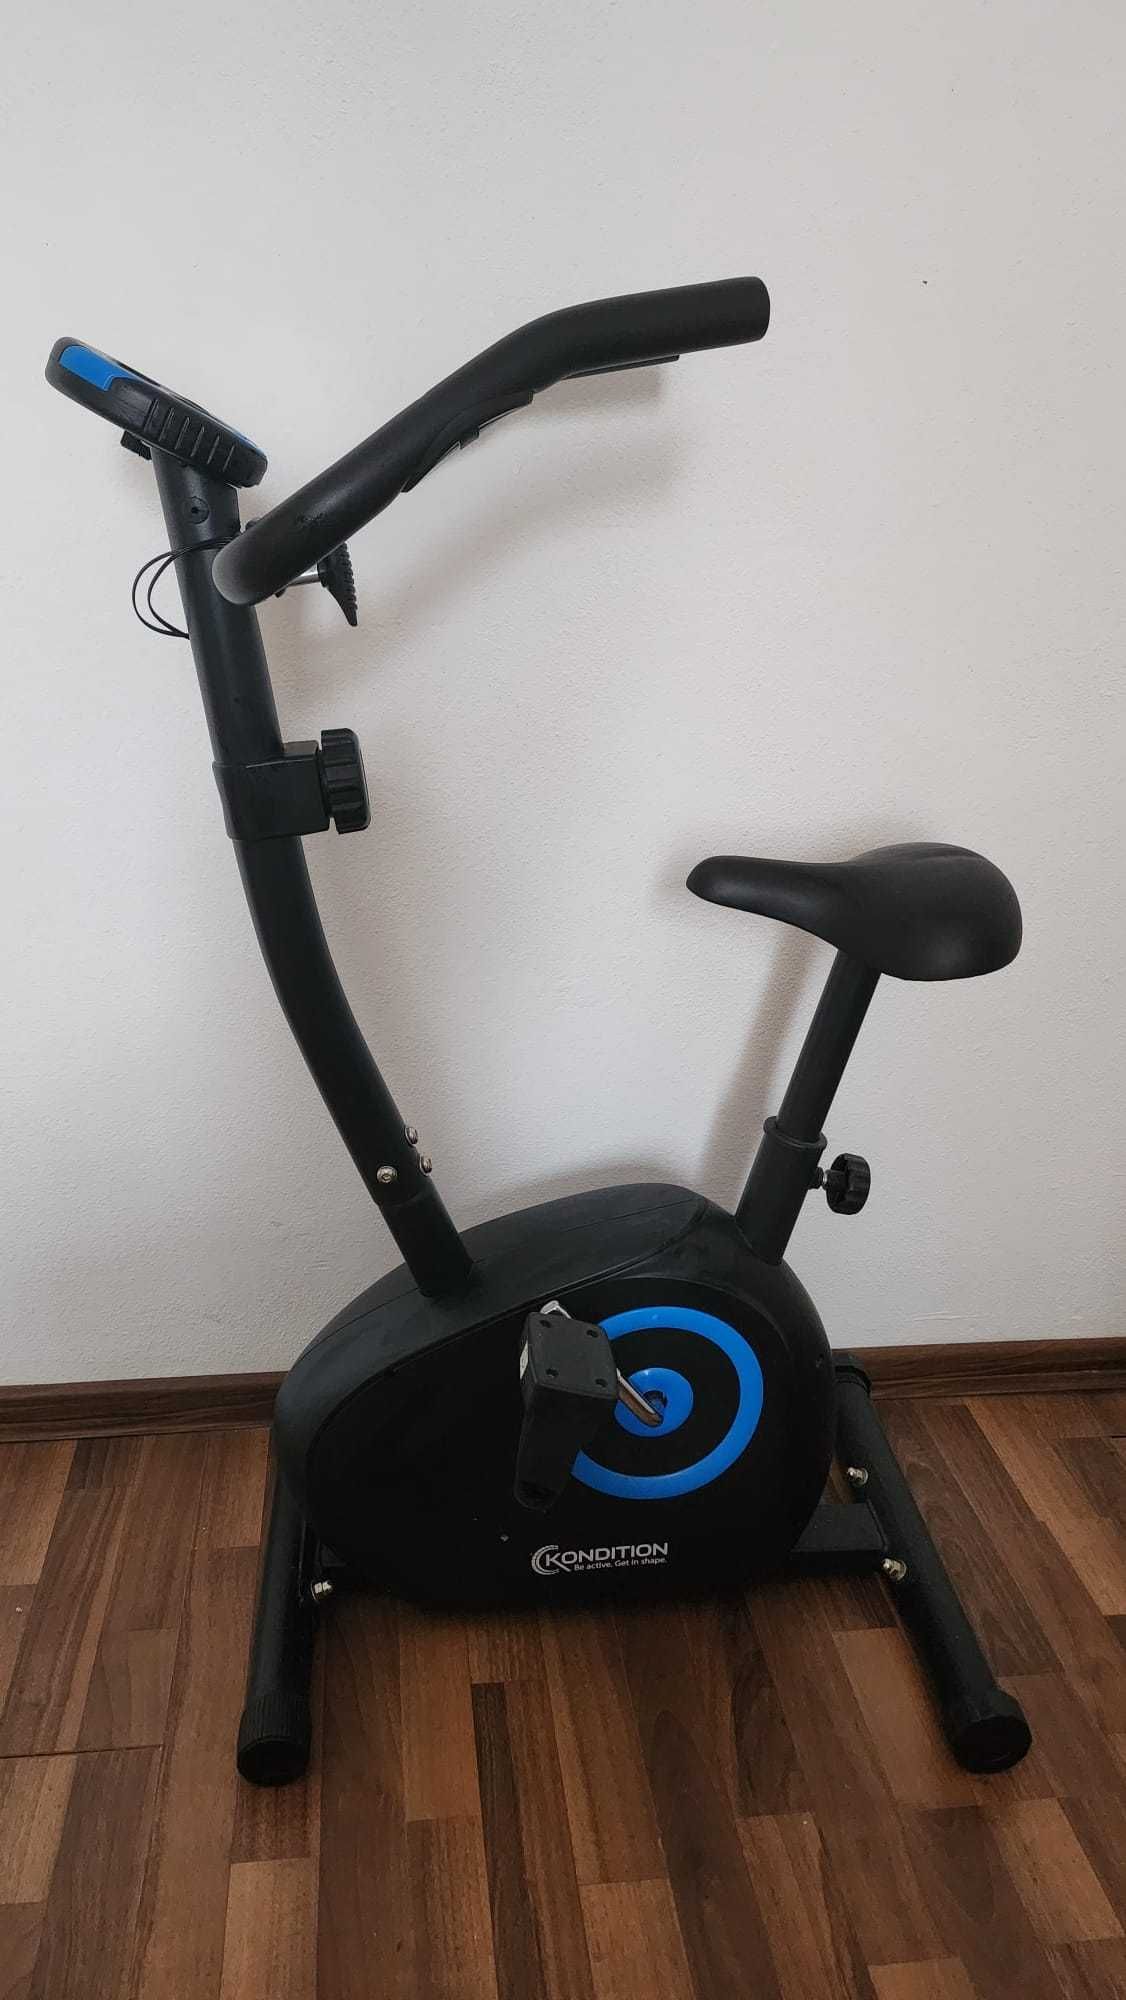 Bicicleta fitness magnetica KONDITION BMG-3900